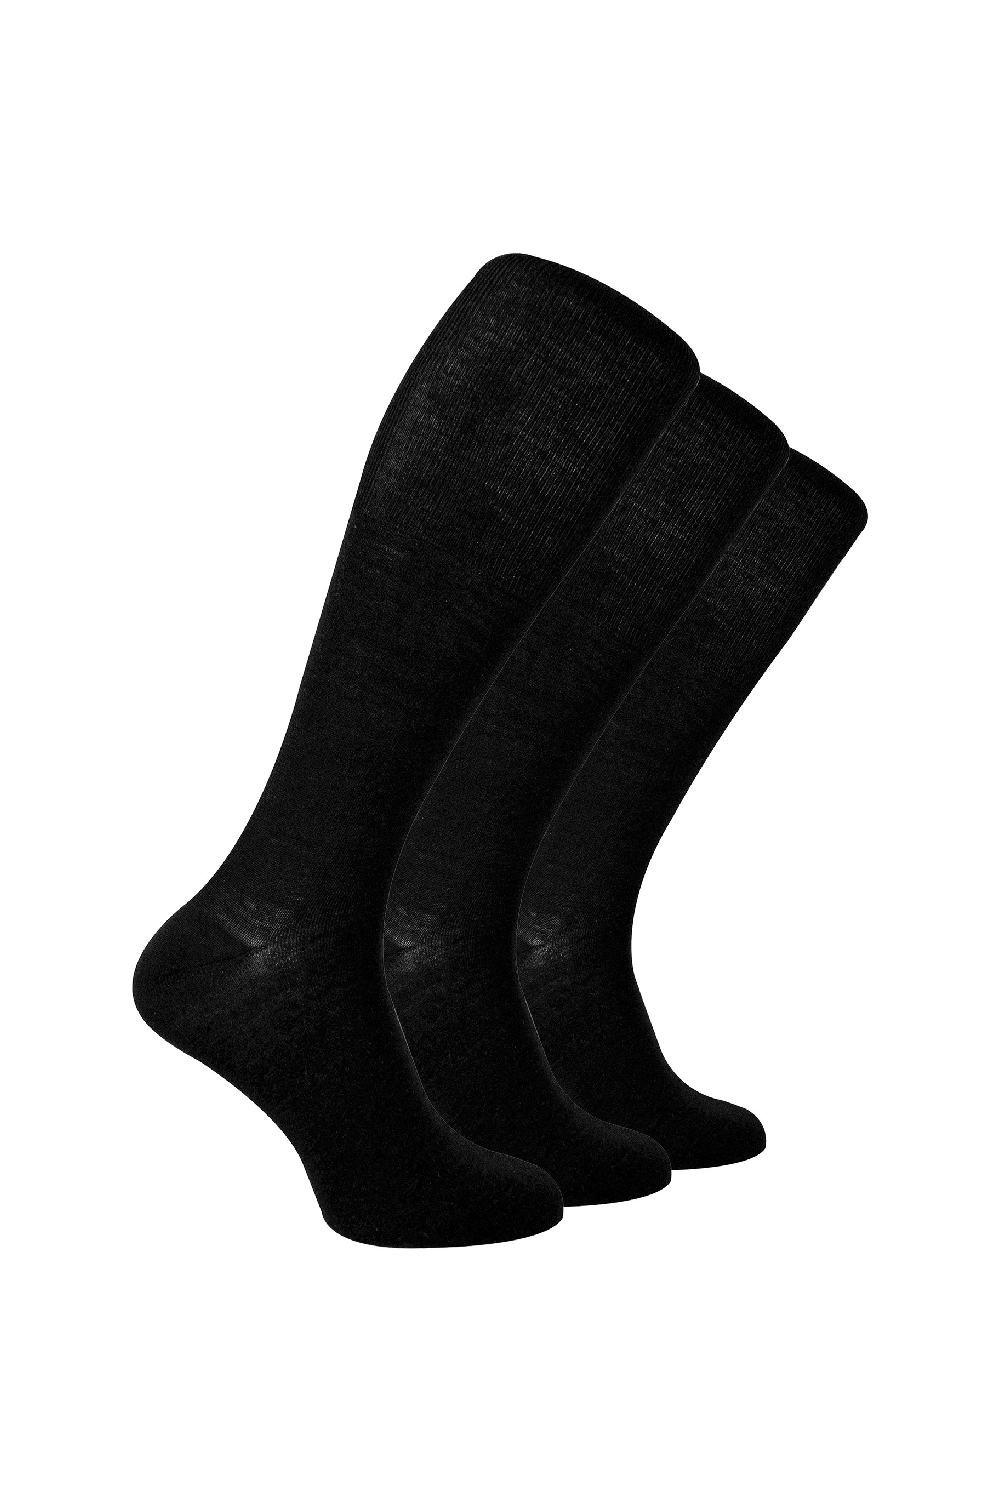 3 Pairs Knee High Soft Breathable Merino Wool Socks